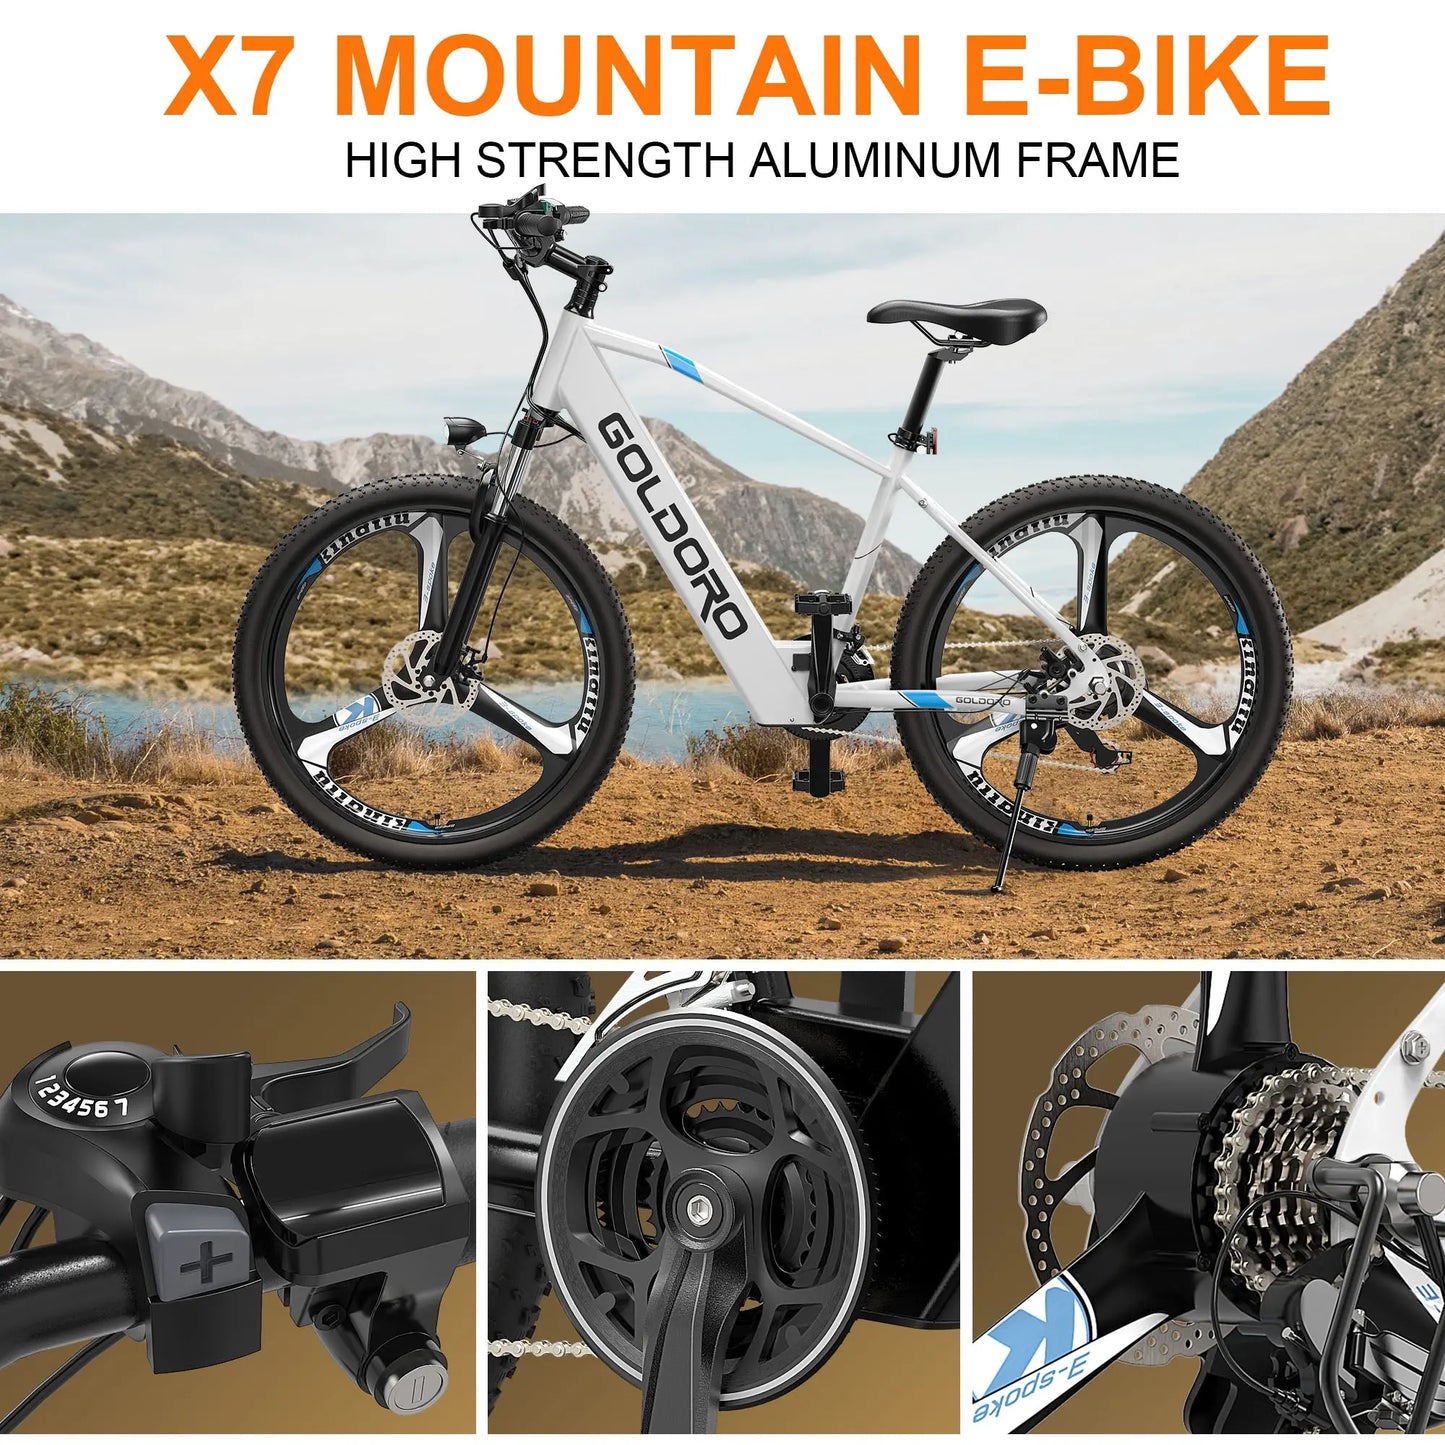 Goldoro Electric Bike 26" X7 Aluminum Alloy Mountain Bike, 250W/36V, MAX 18 MPH, 21 speed with Alloy Wheels (White)